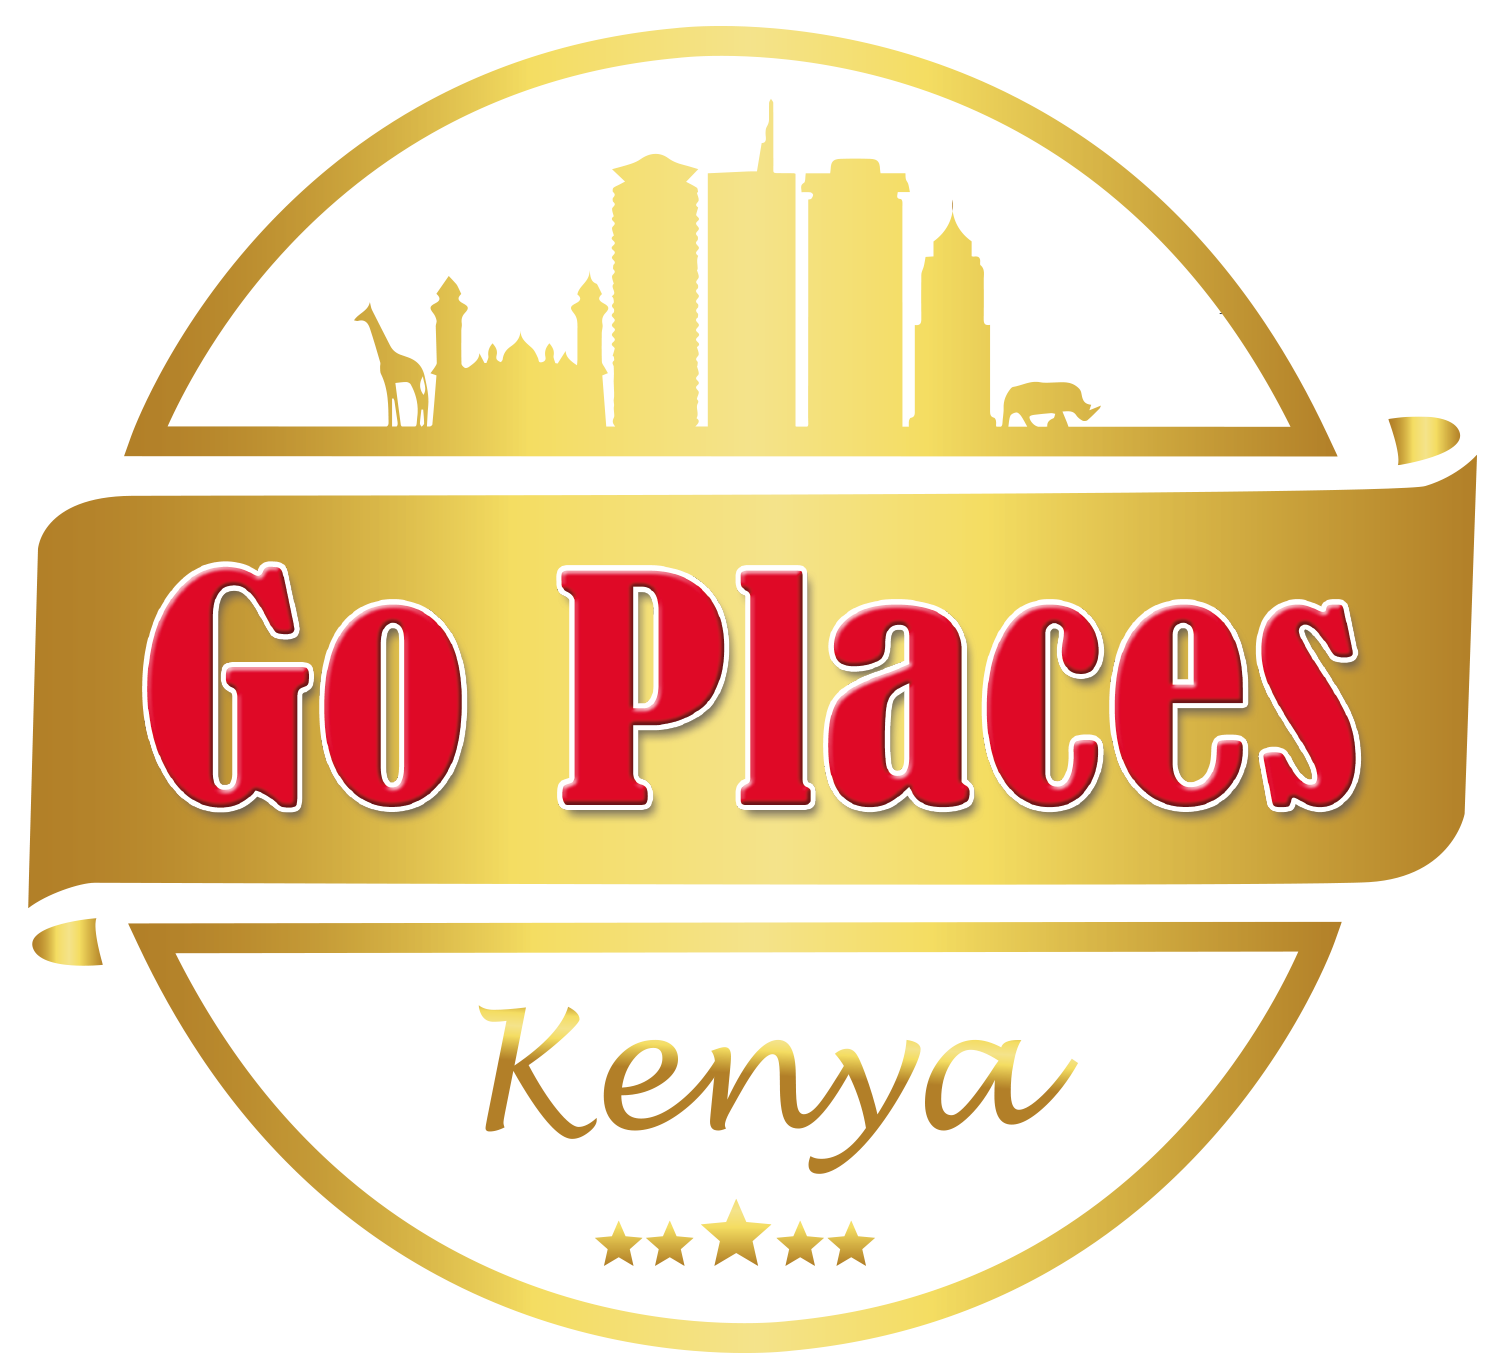 Go Places Kenya